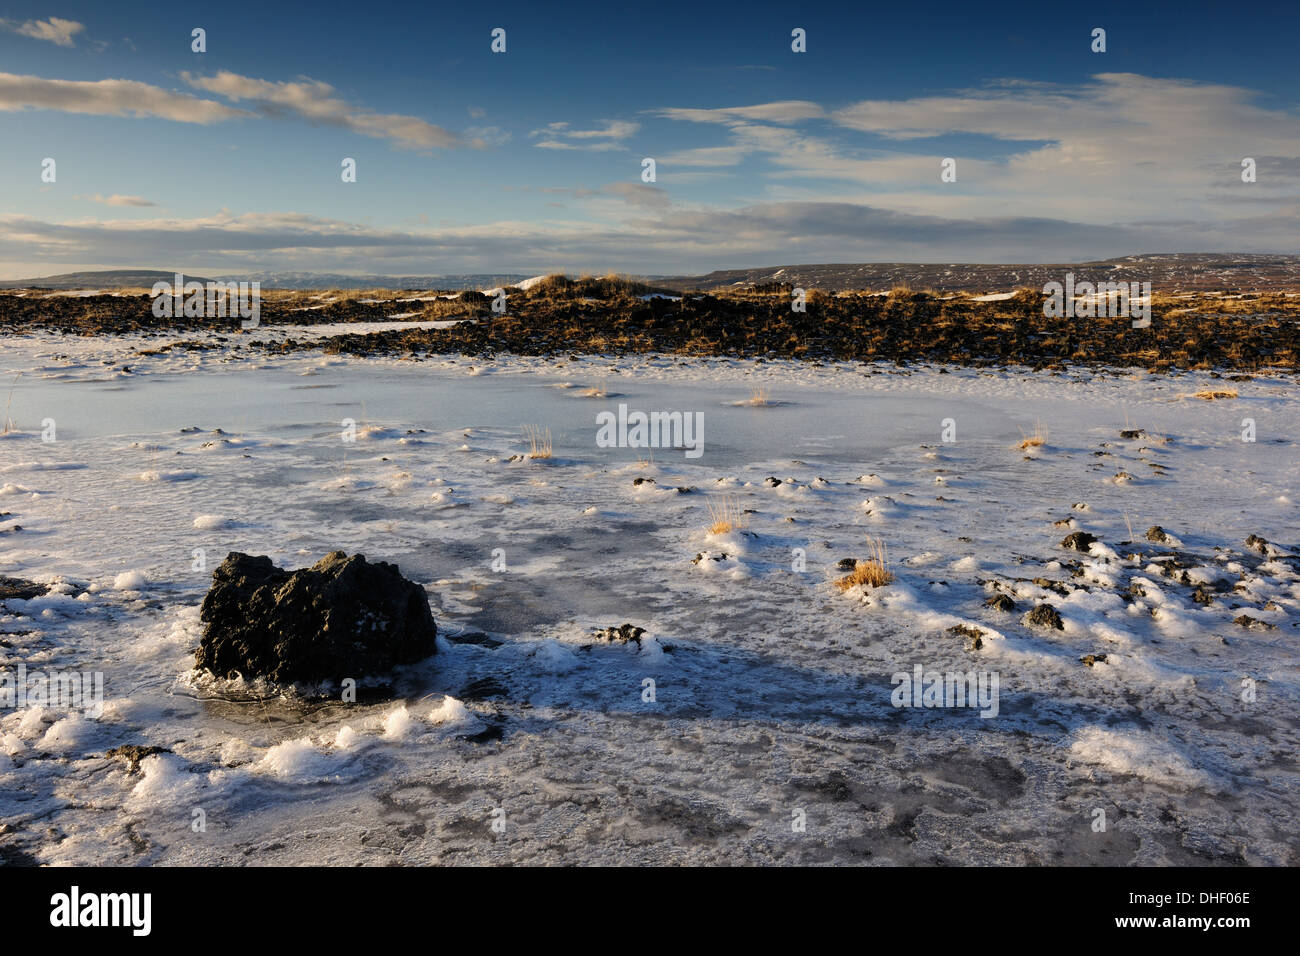 View on a frozen volcanic landscape, Merkurhraun, Iceland. Stock Photo